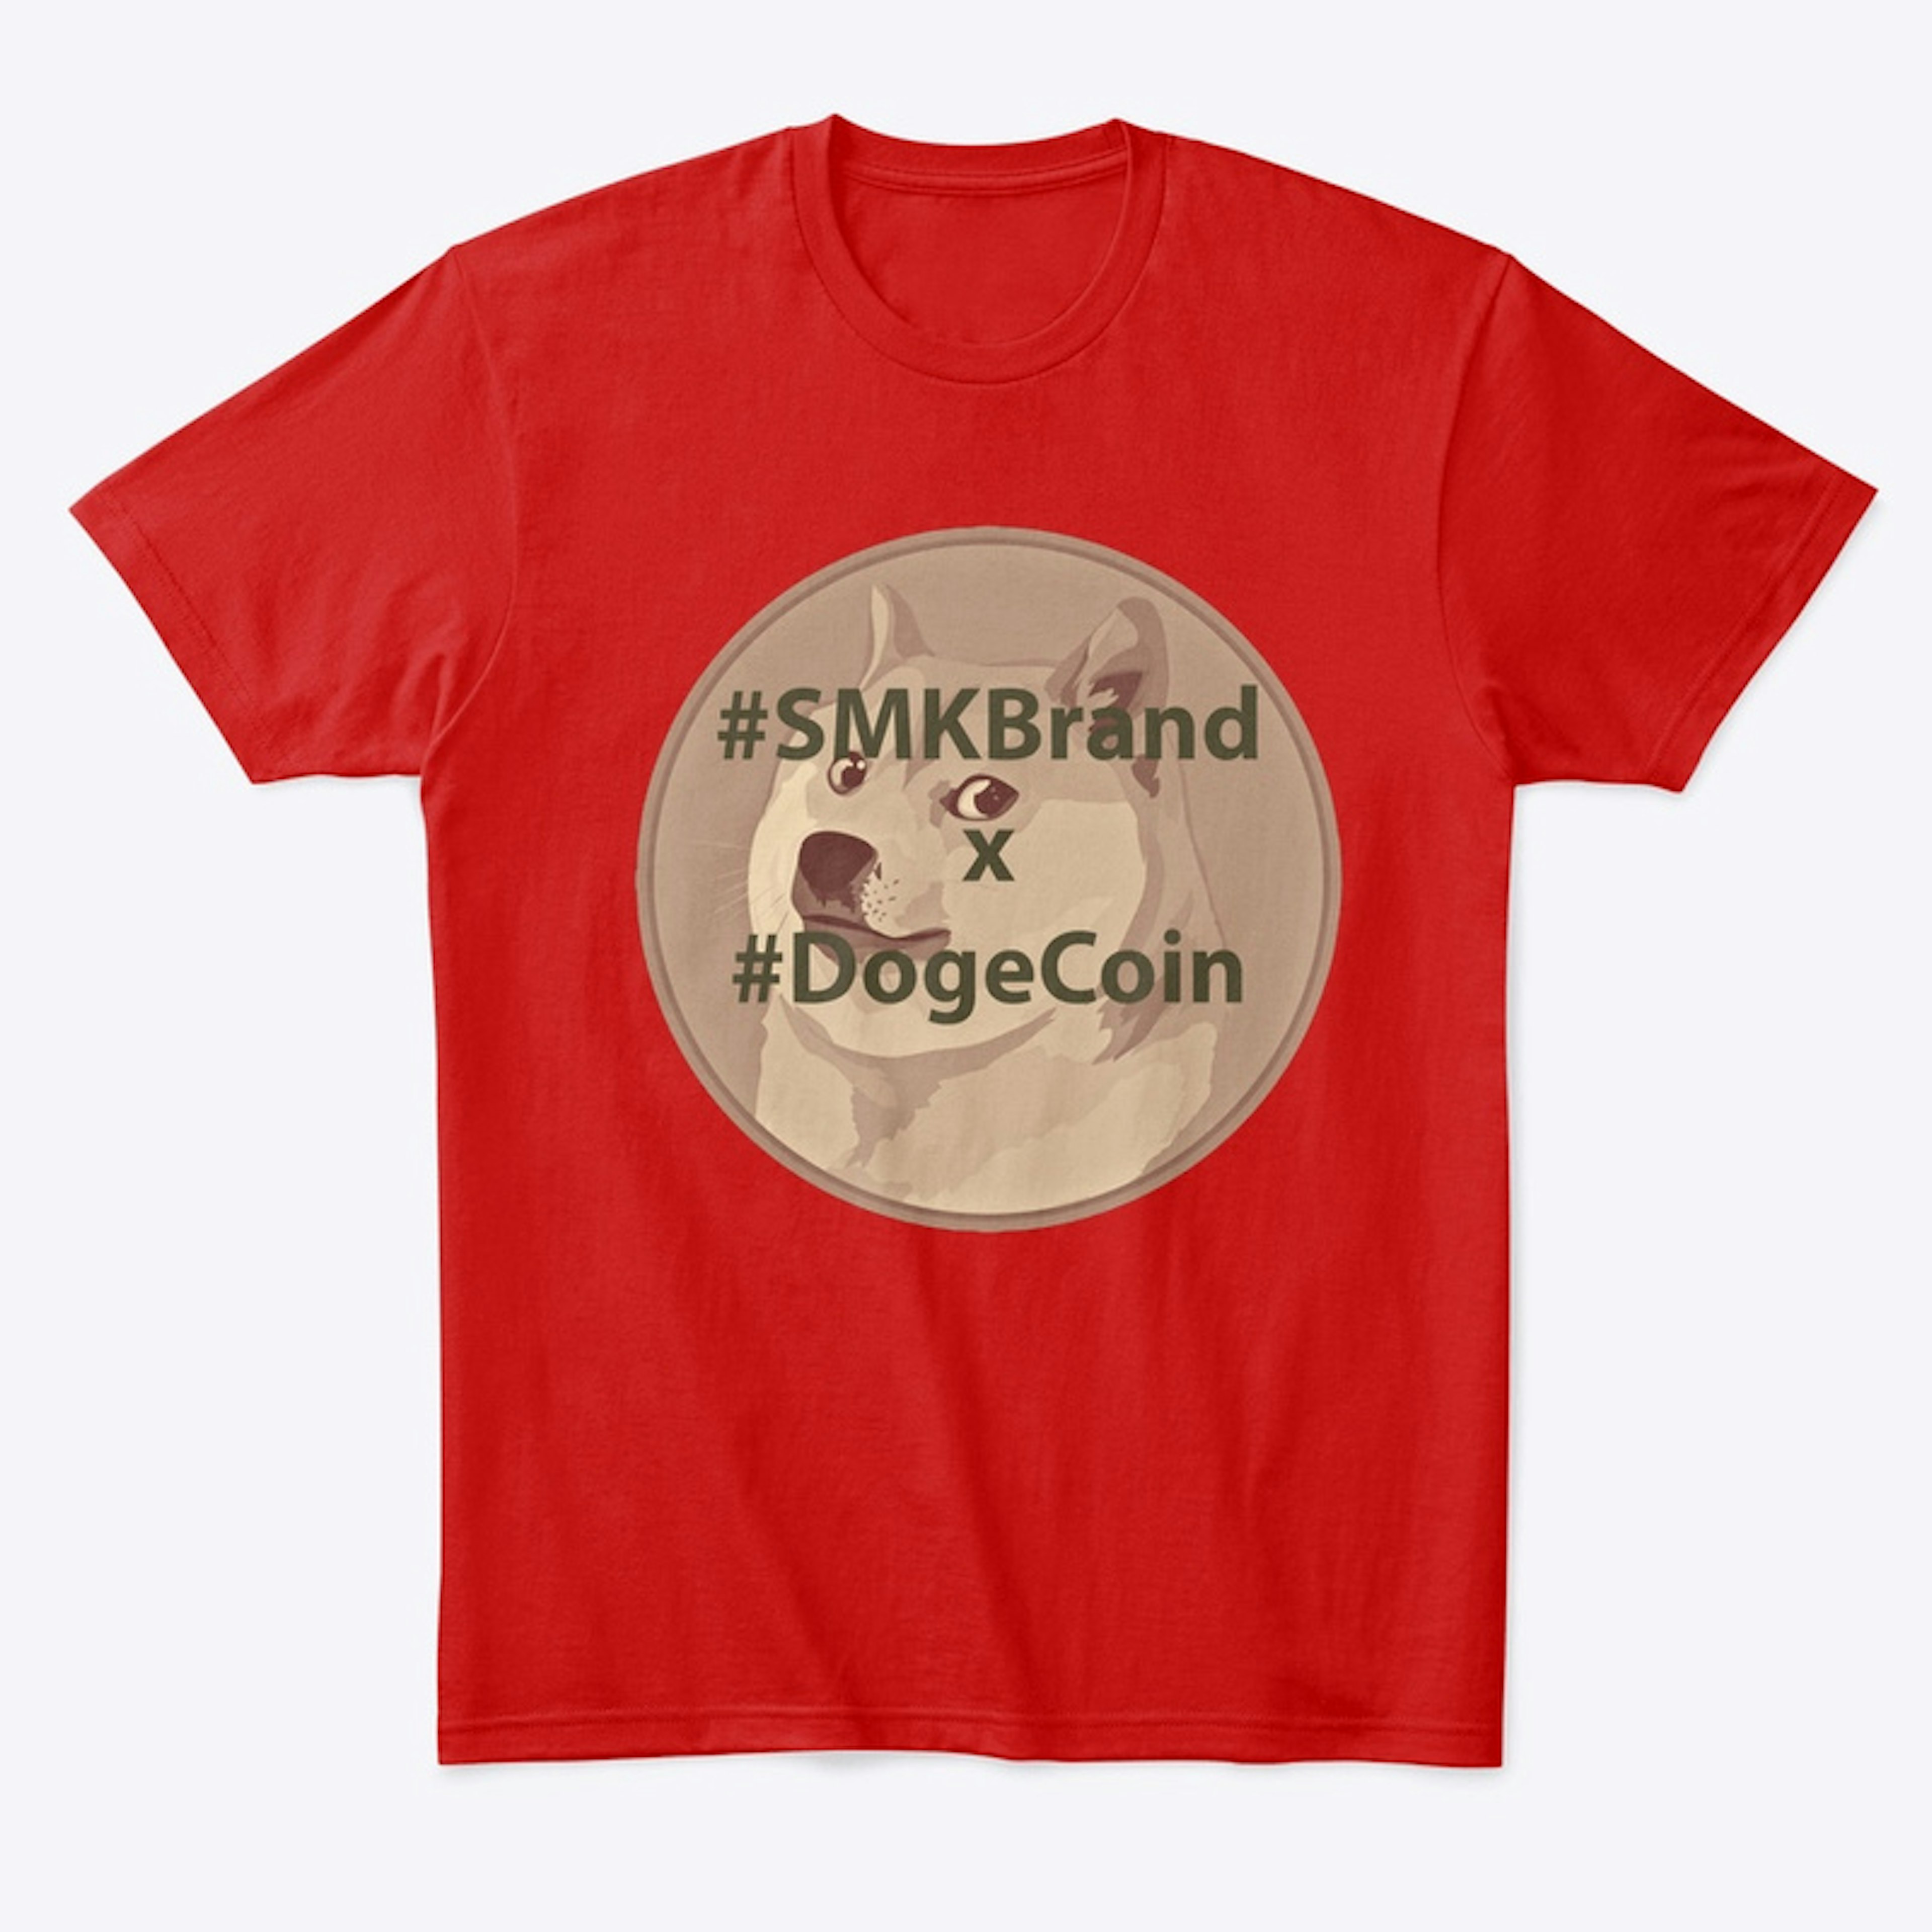 SMK Brand x Dogecoin